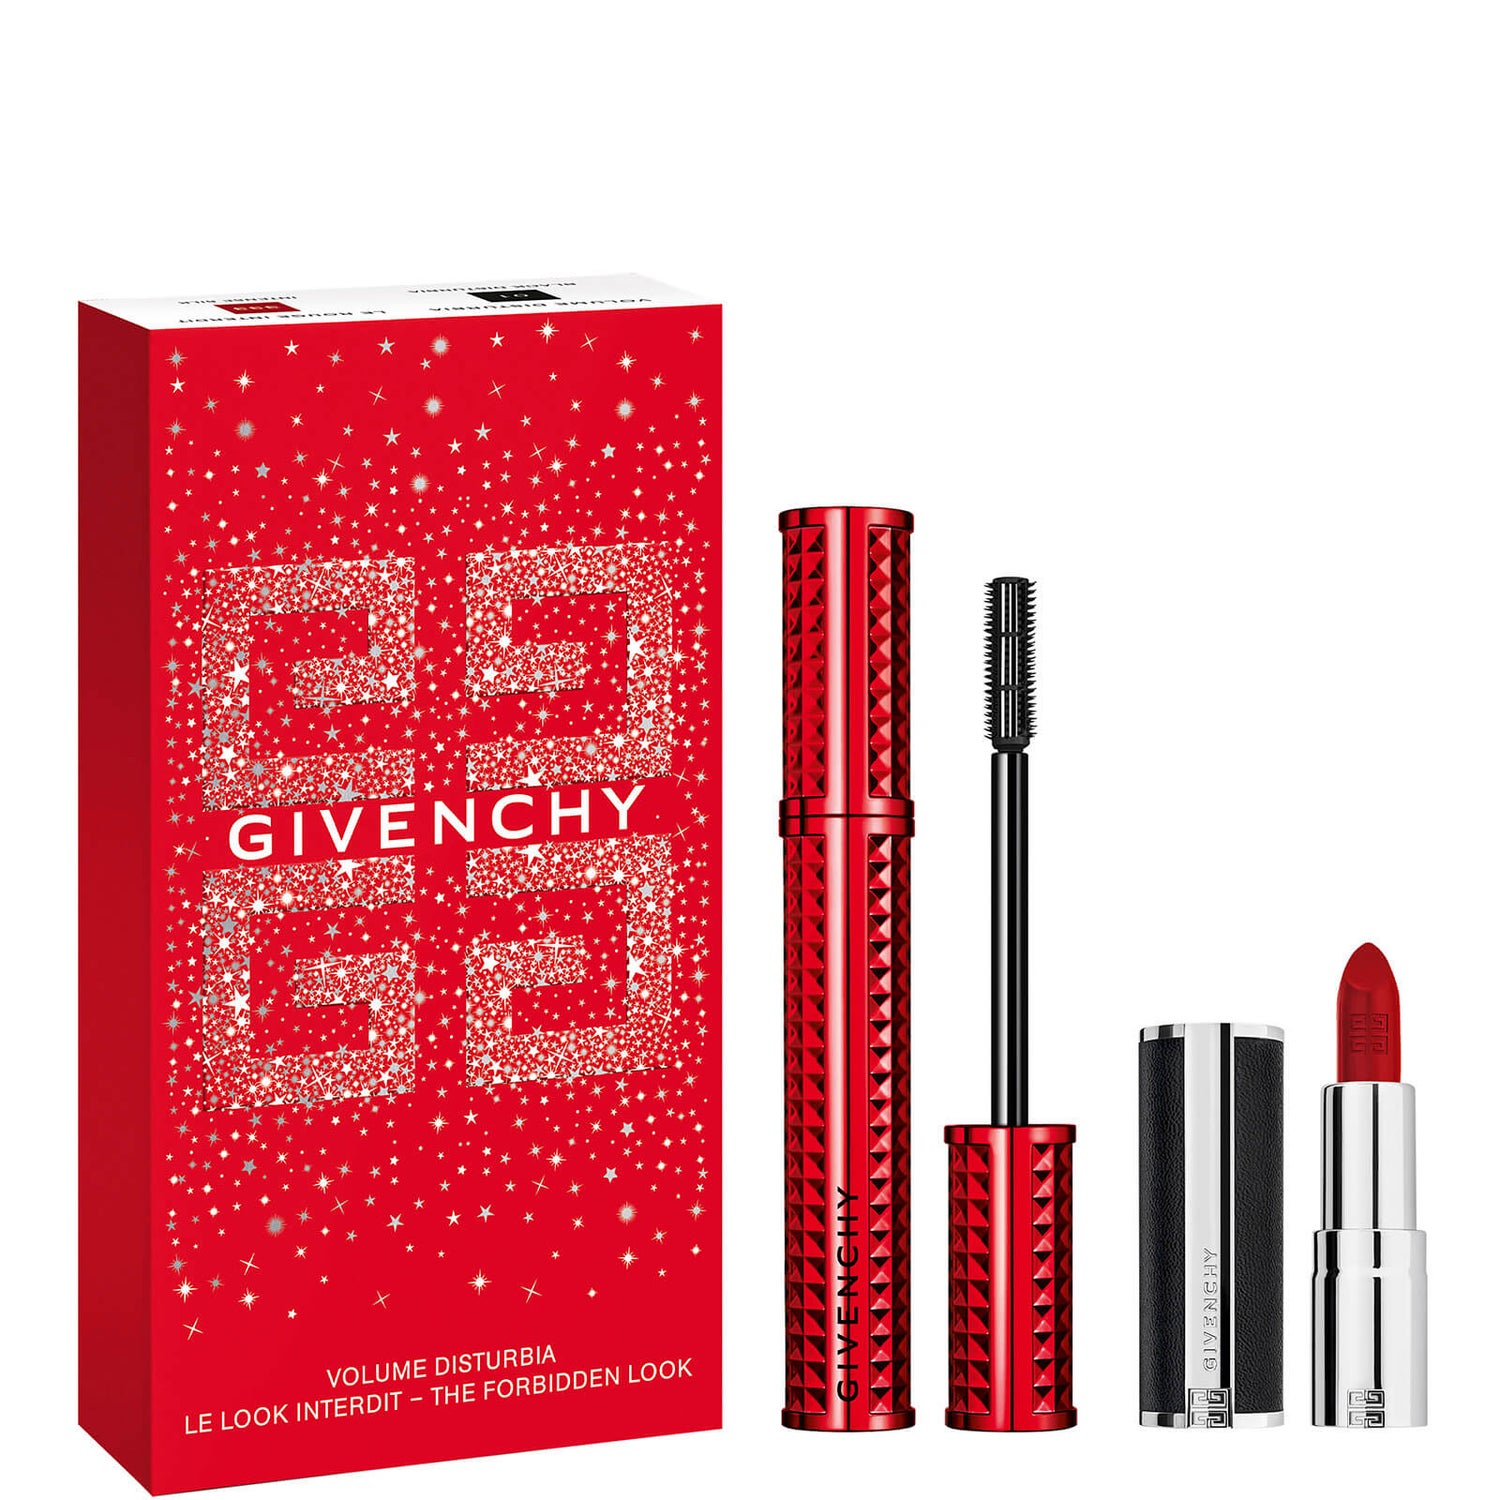 Givenchy Disturbia Mascara Christmas Gift Set